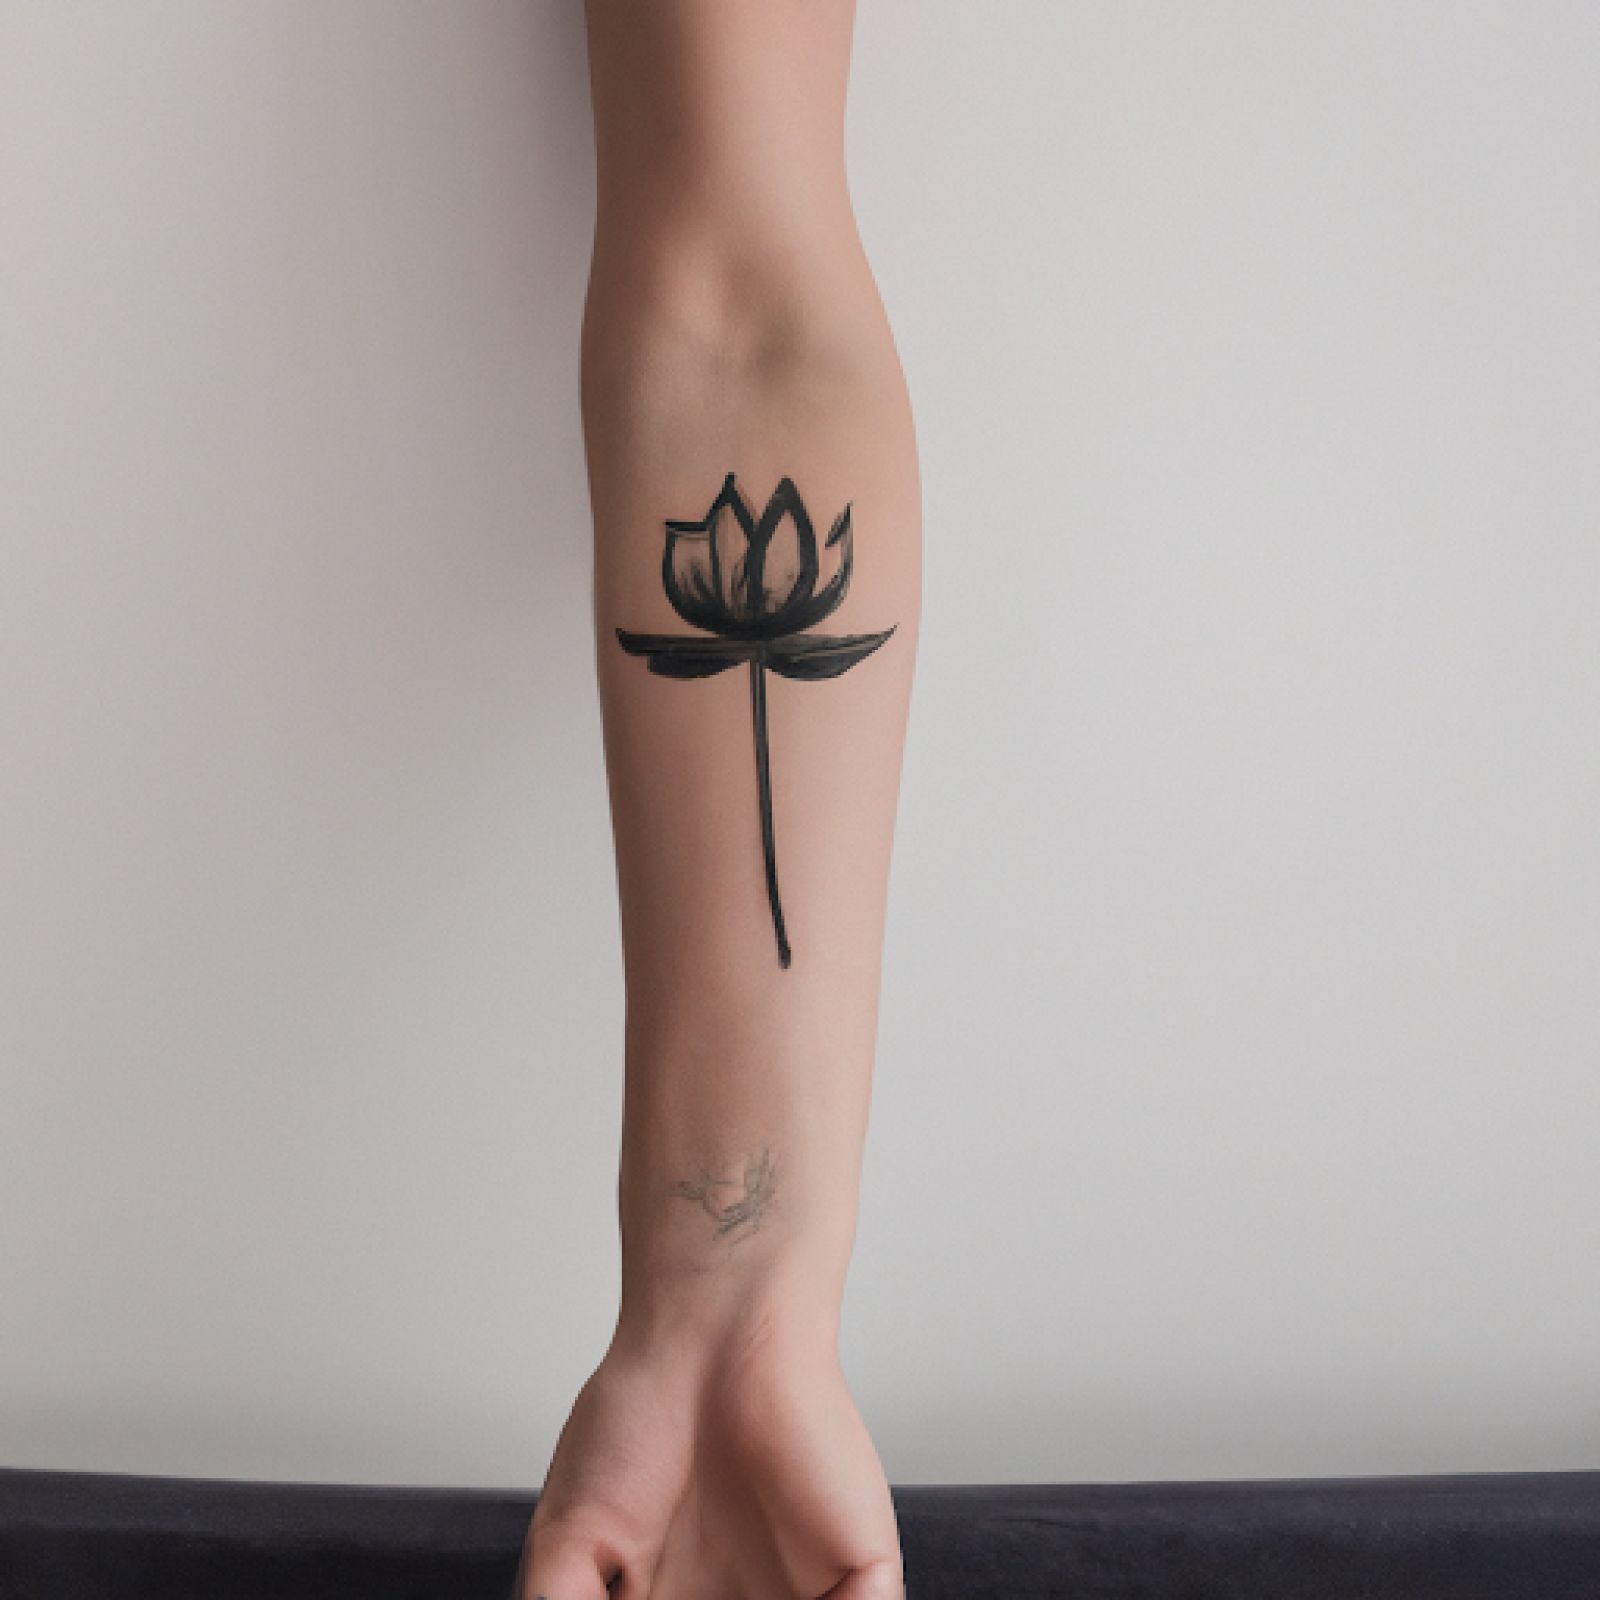 Lotus tattoo on arm for women